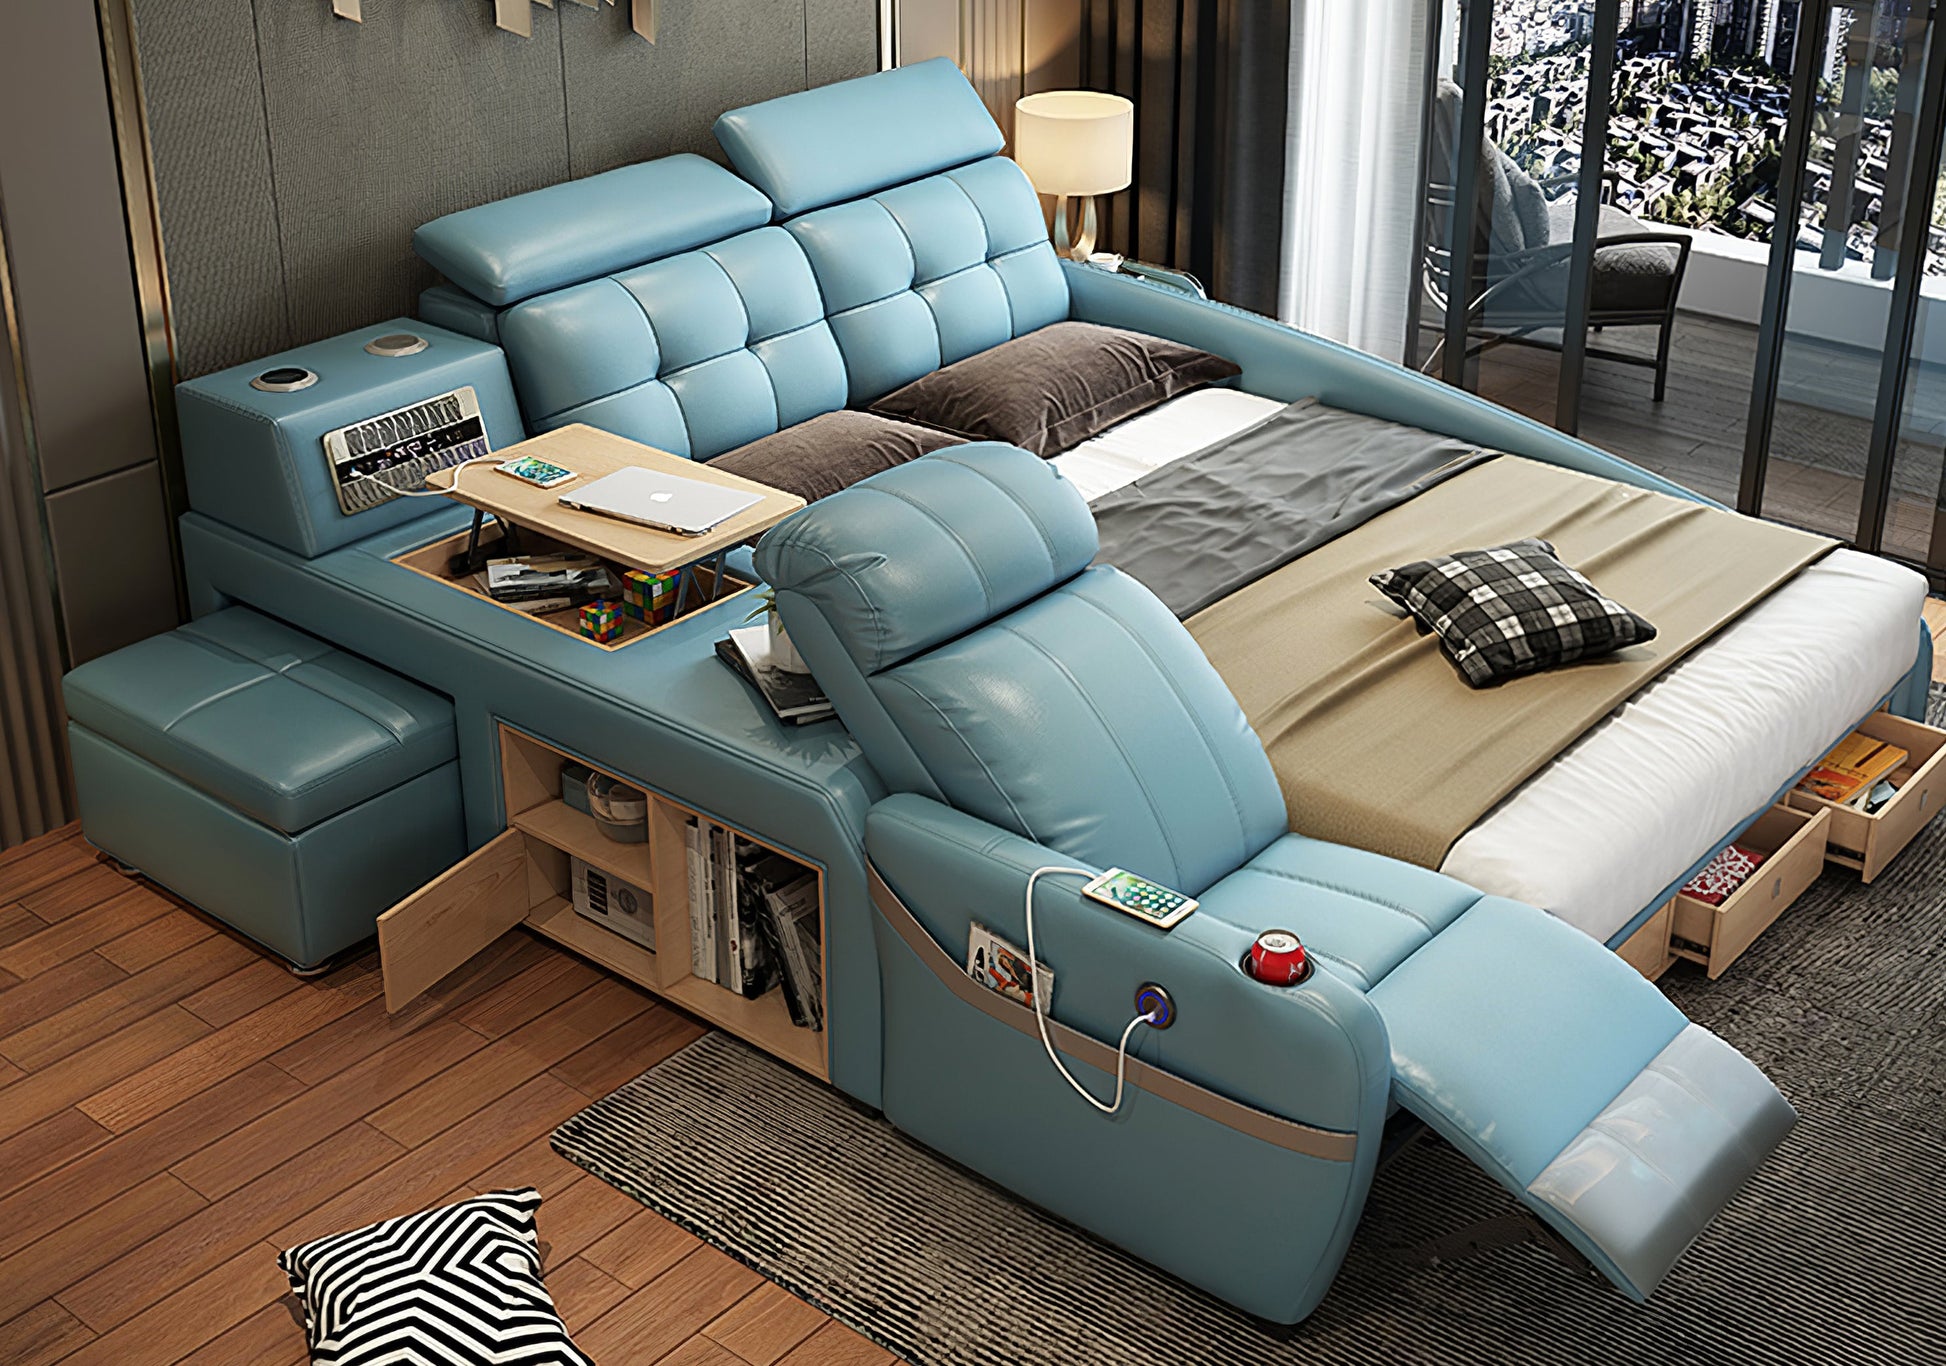 Multifunctional Smart Bed | Futuristic Furniture